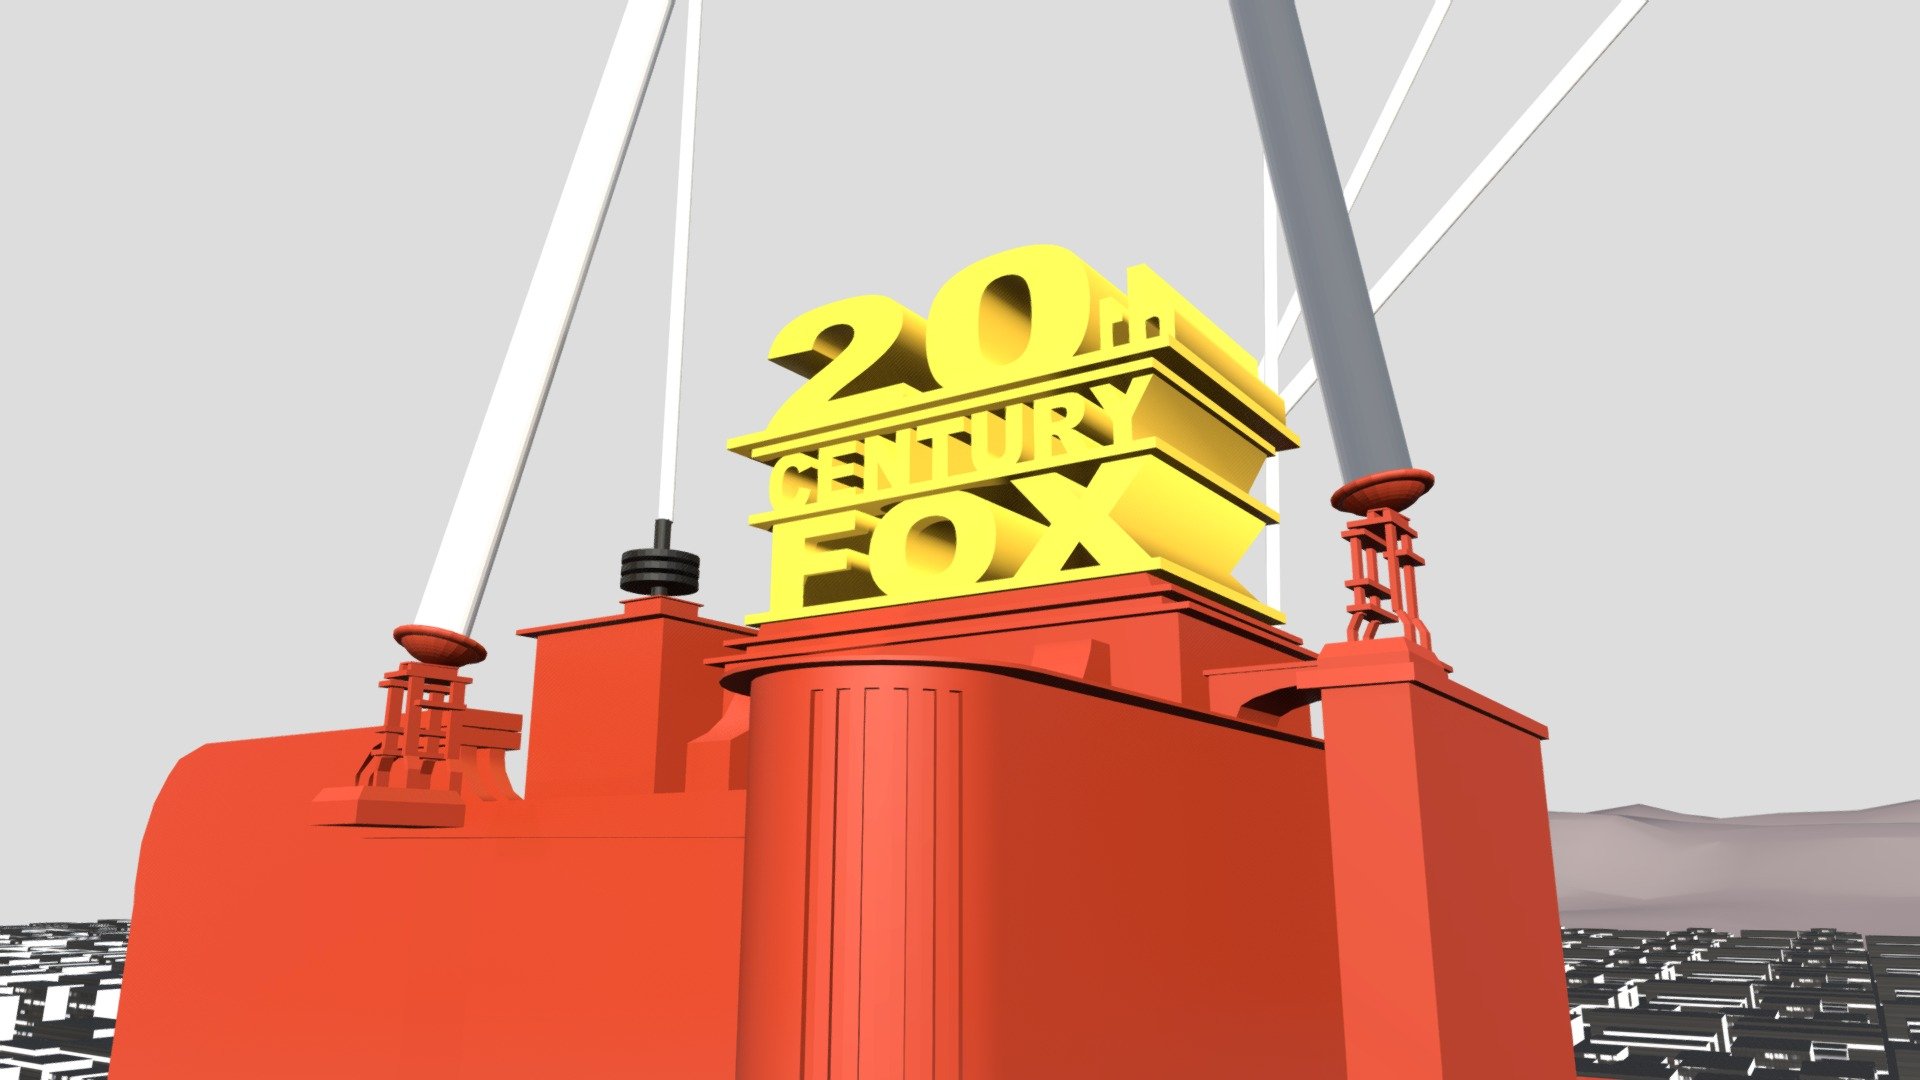 20th Century Fox Logo Remake 14 3d Warehouse - vrogue.co